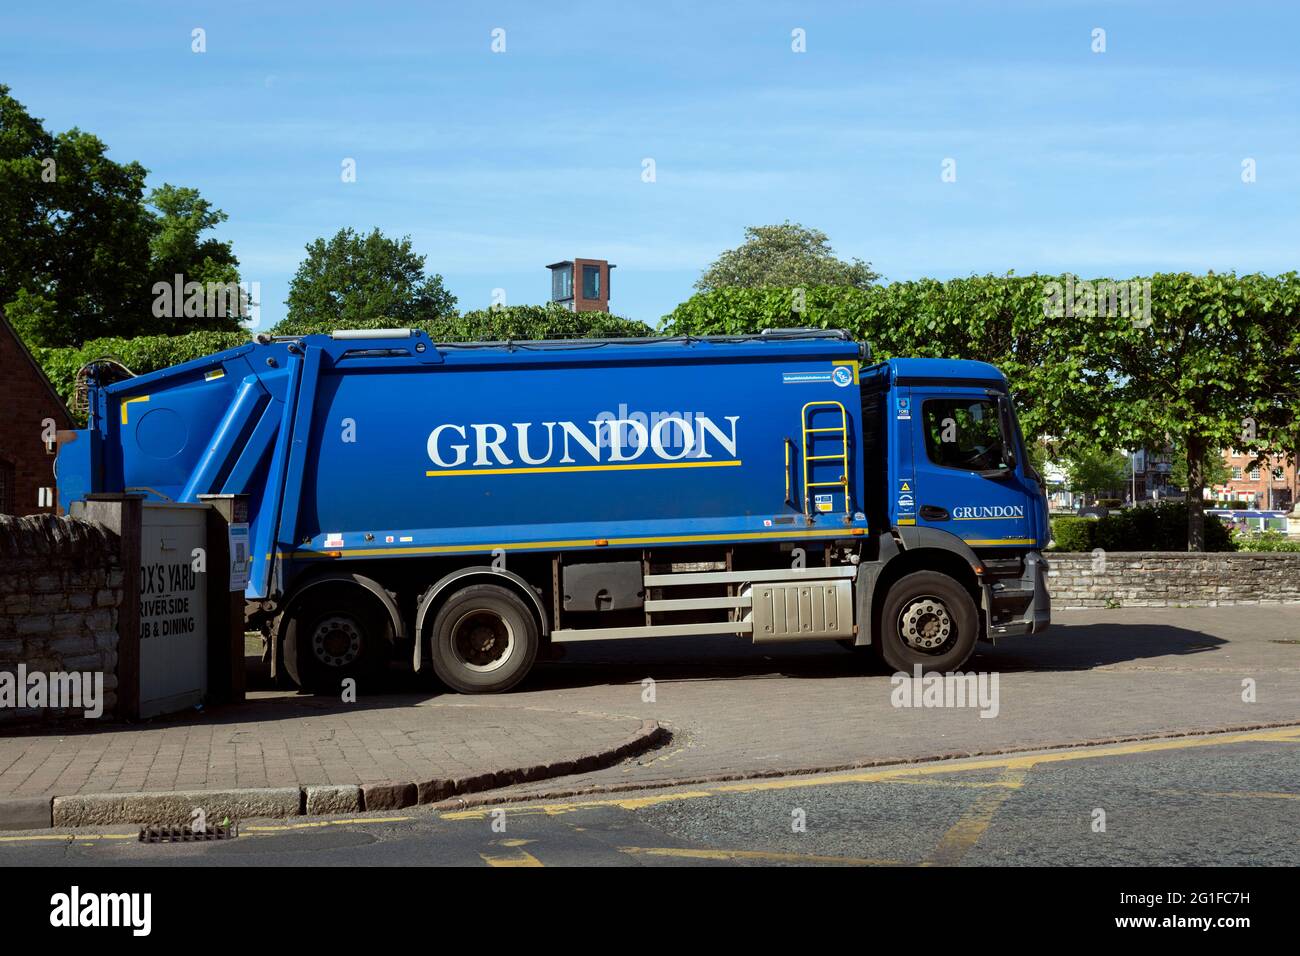 A Grundon refuse lorry, Stratford-upon-Avon, Warwickshire, UK Stock Photo